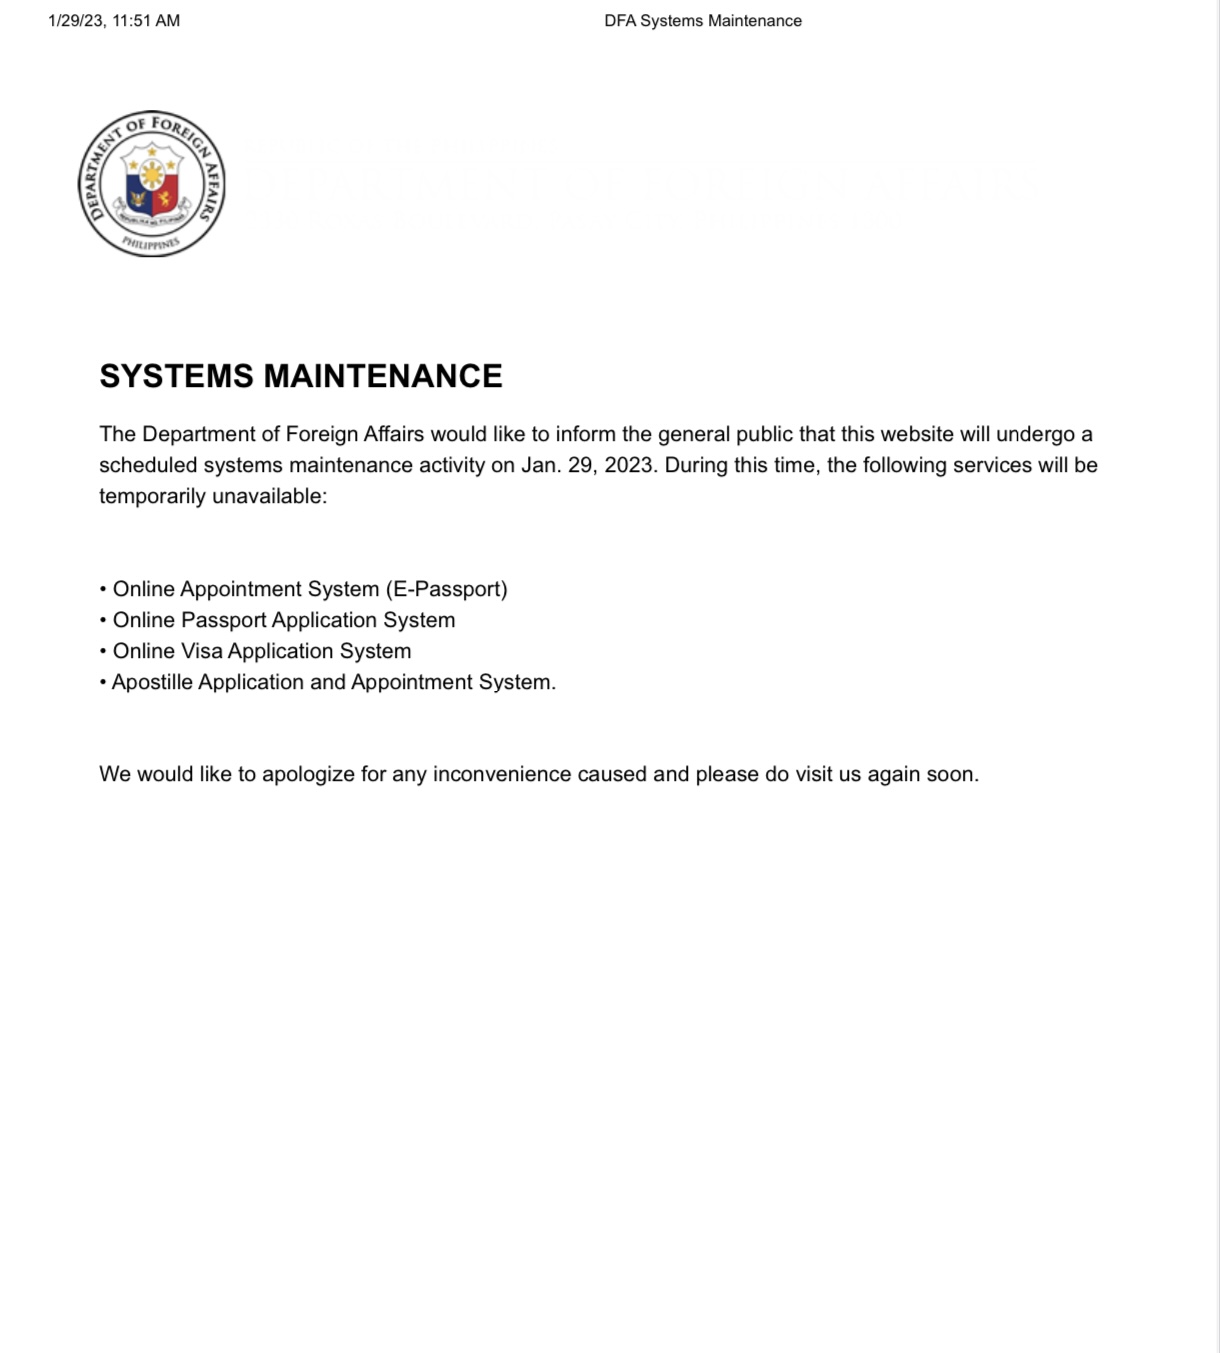 DFA Systems Maintenance